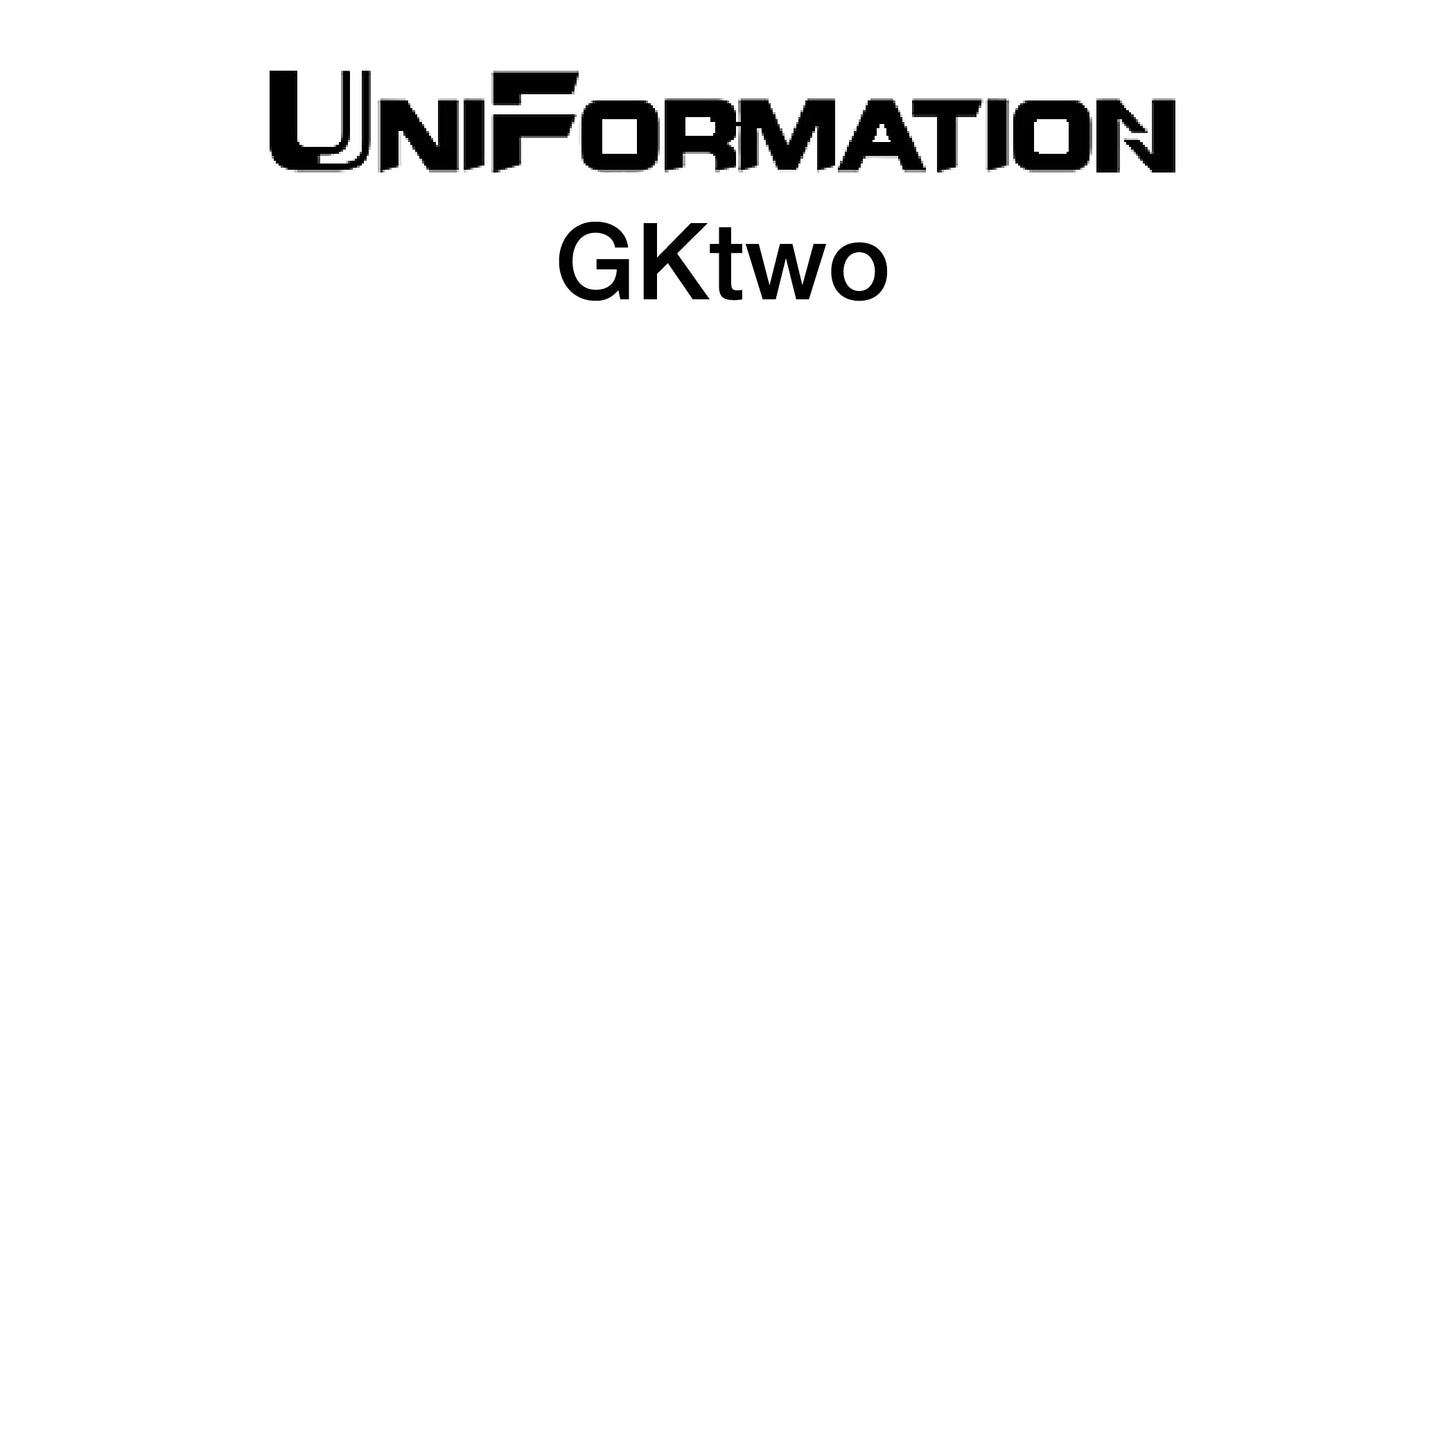 Kit - UniFormation GKtwo - 229 x 129